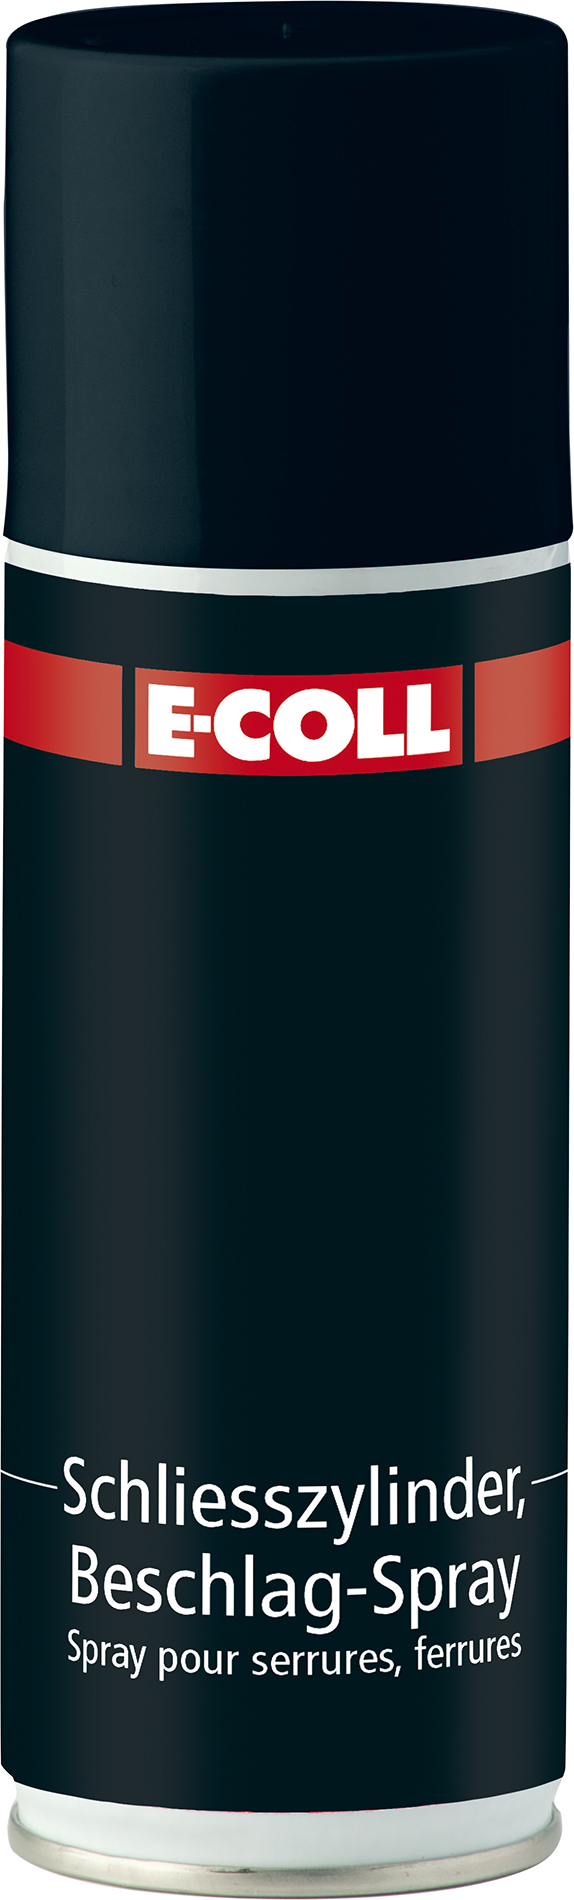 E-COLL Schliesszylinder-/Be-schlagspray 200ml